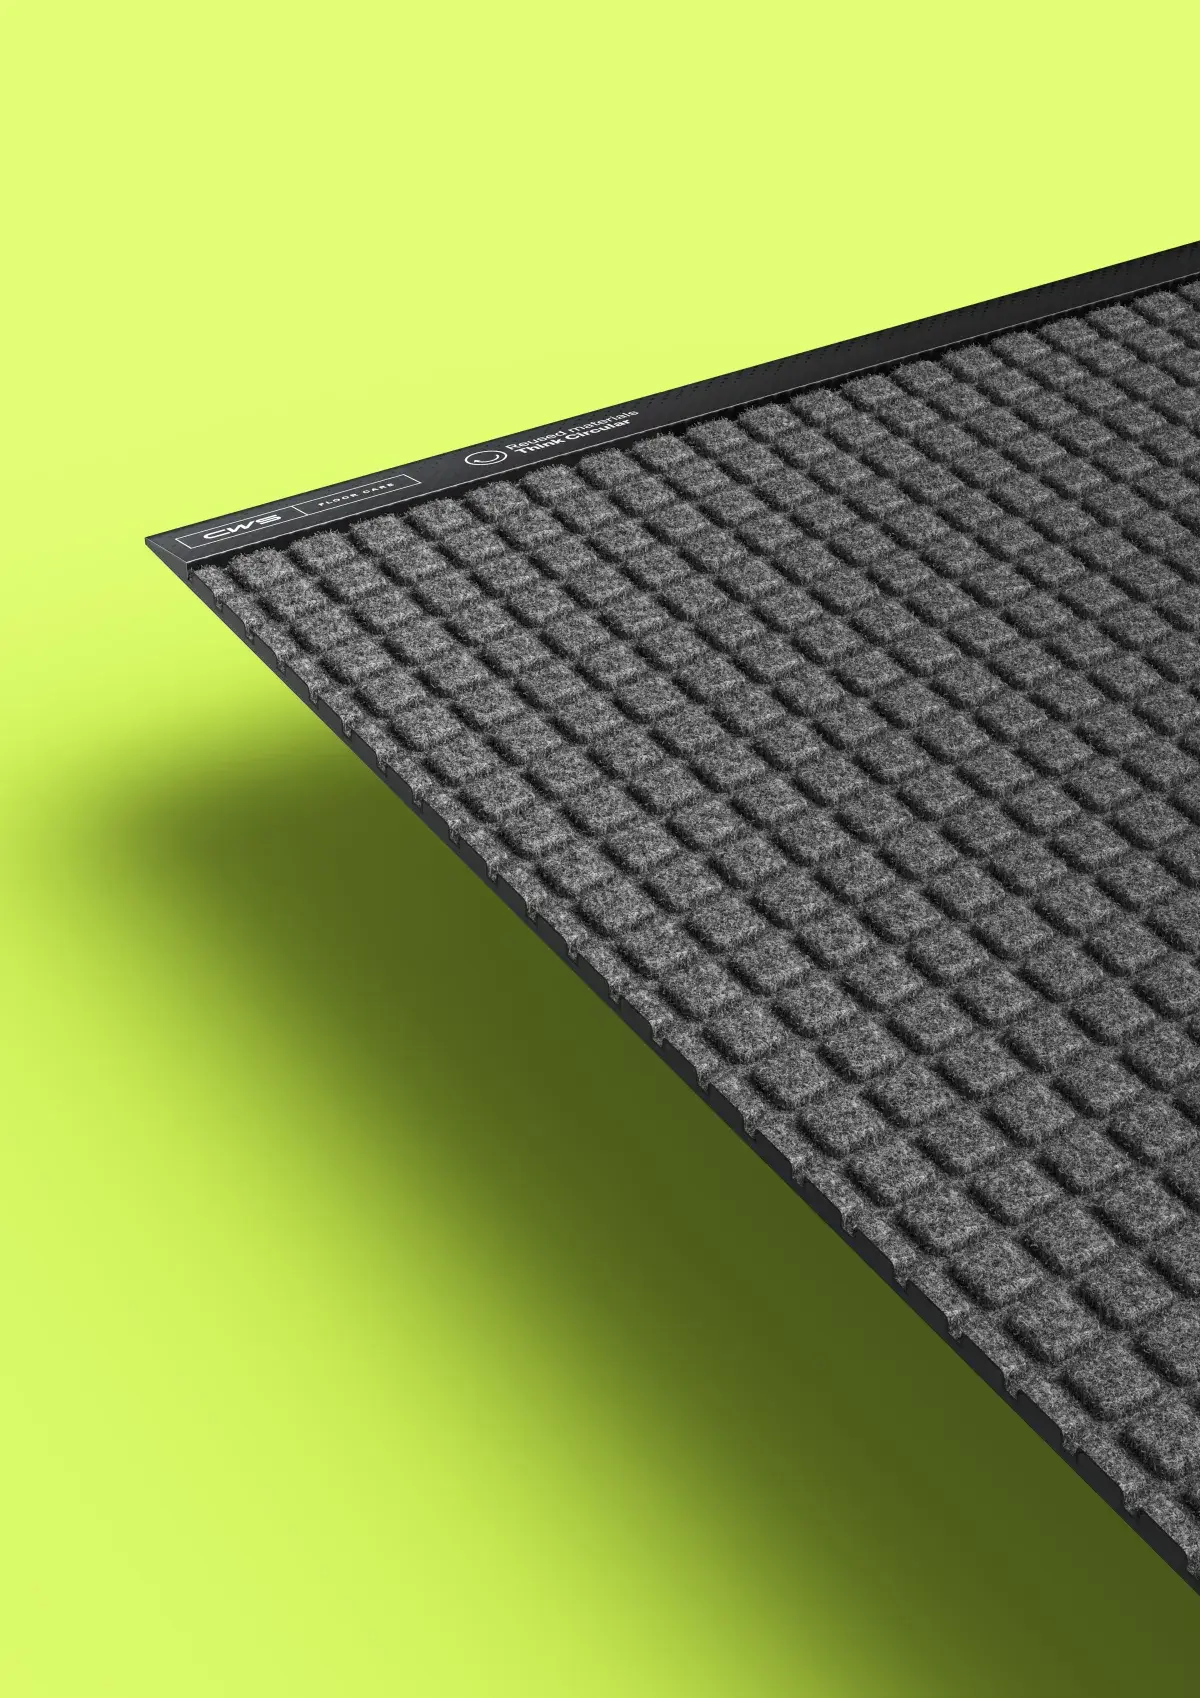 CWS GreenPremium mat with green brackground